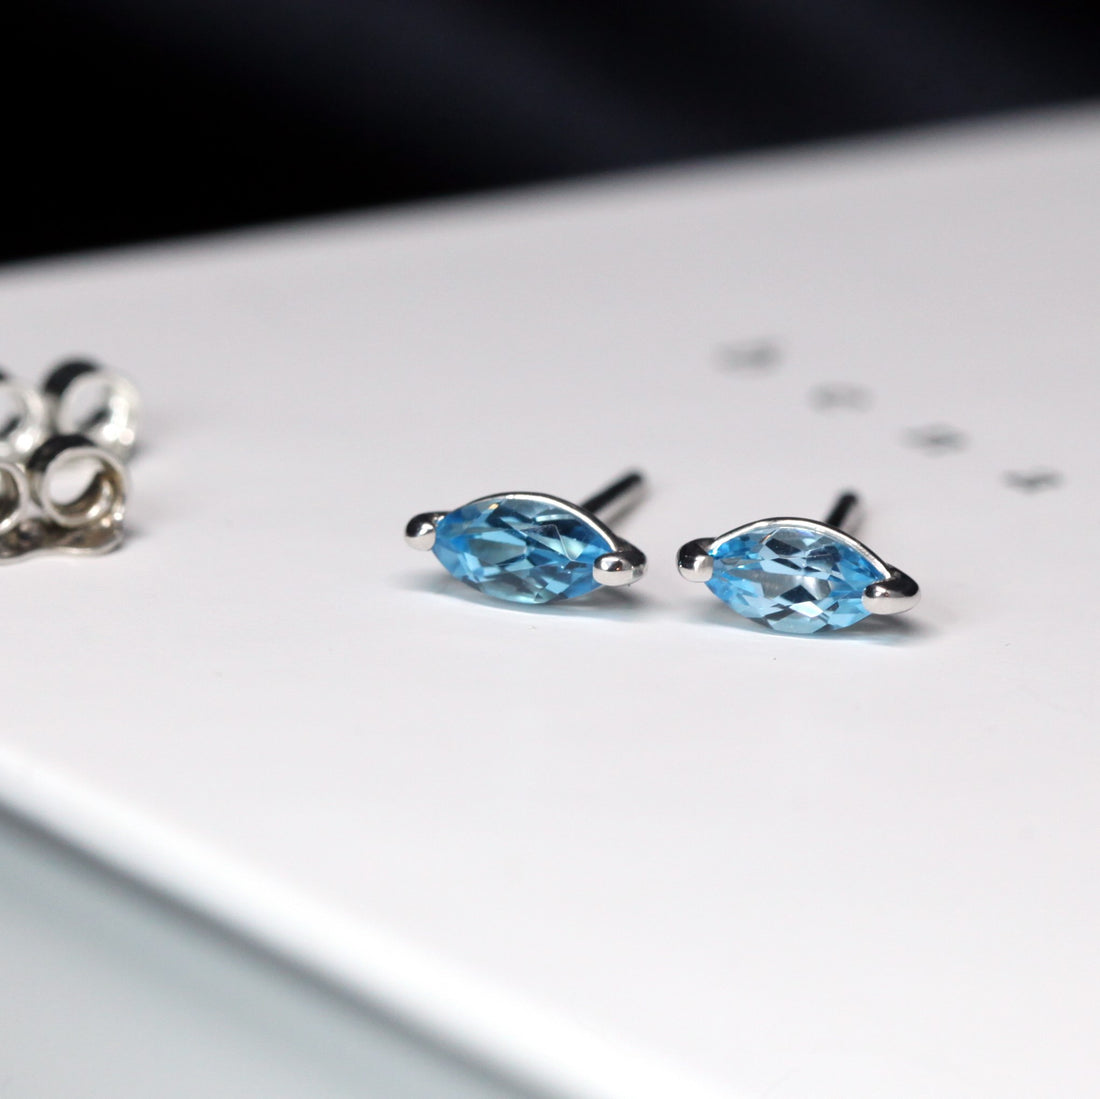 Gemstone stud earrings sterling silver marquise blue topaz